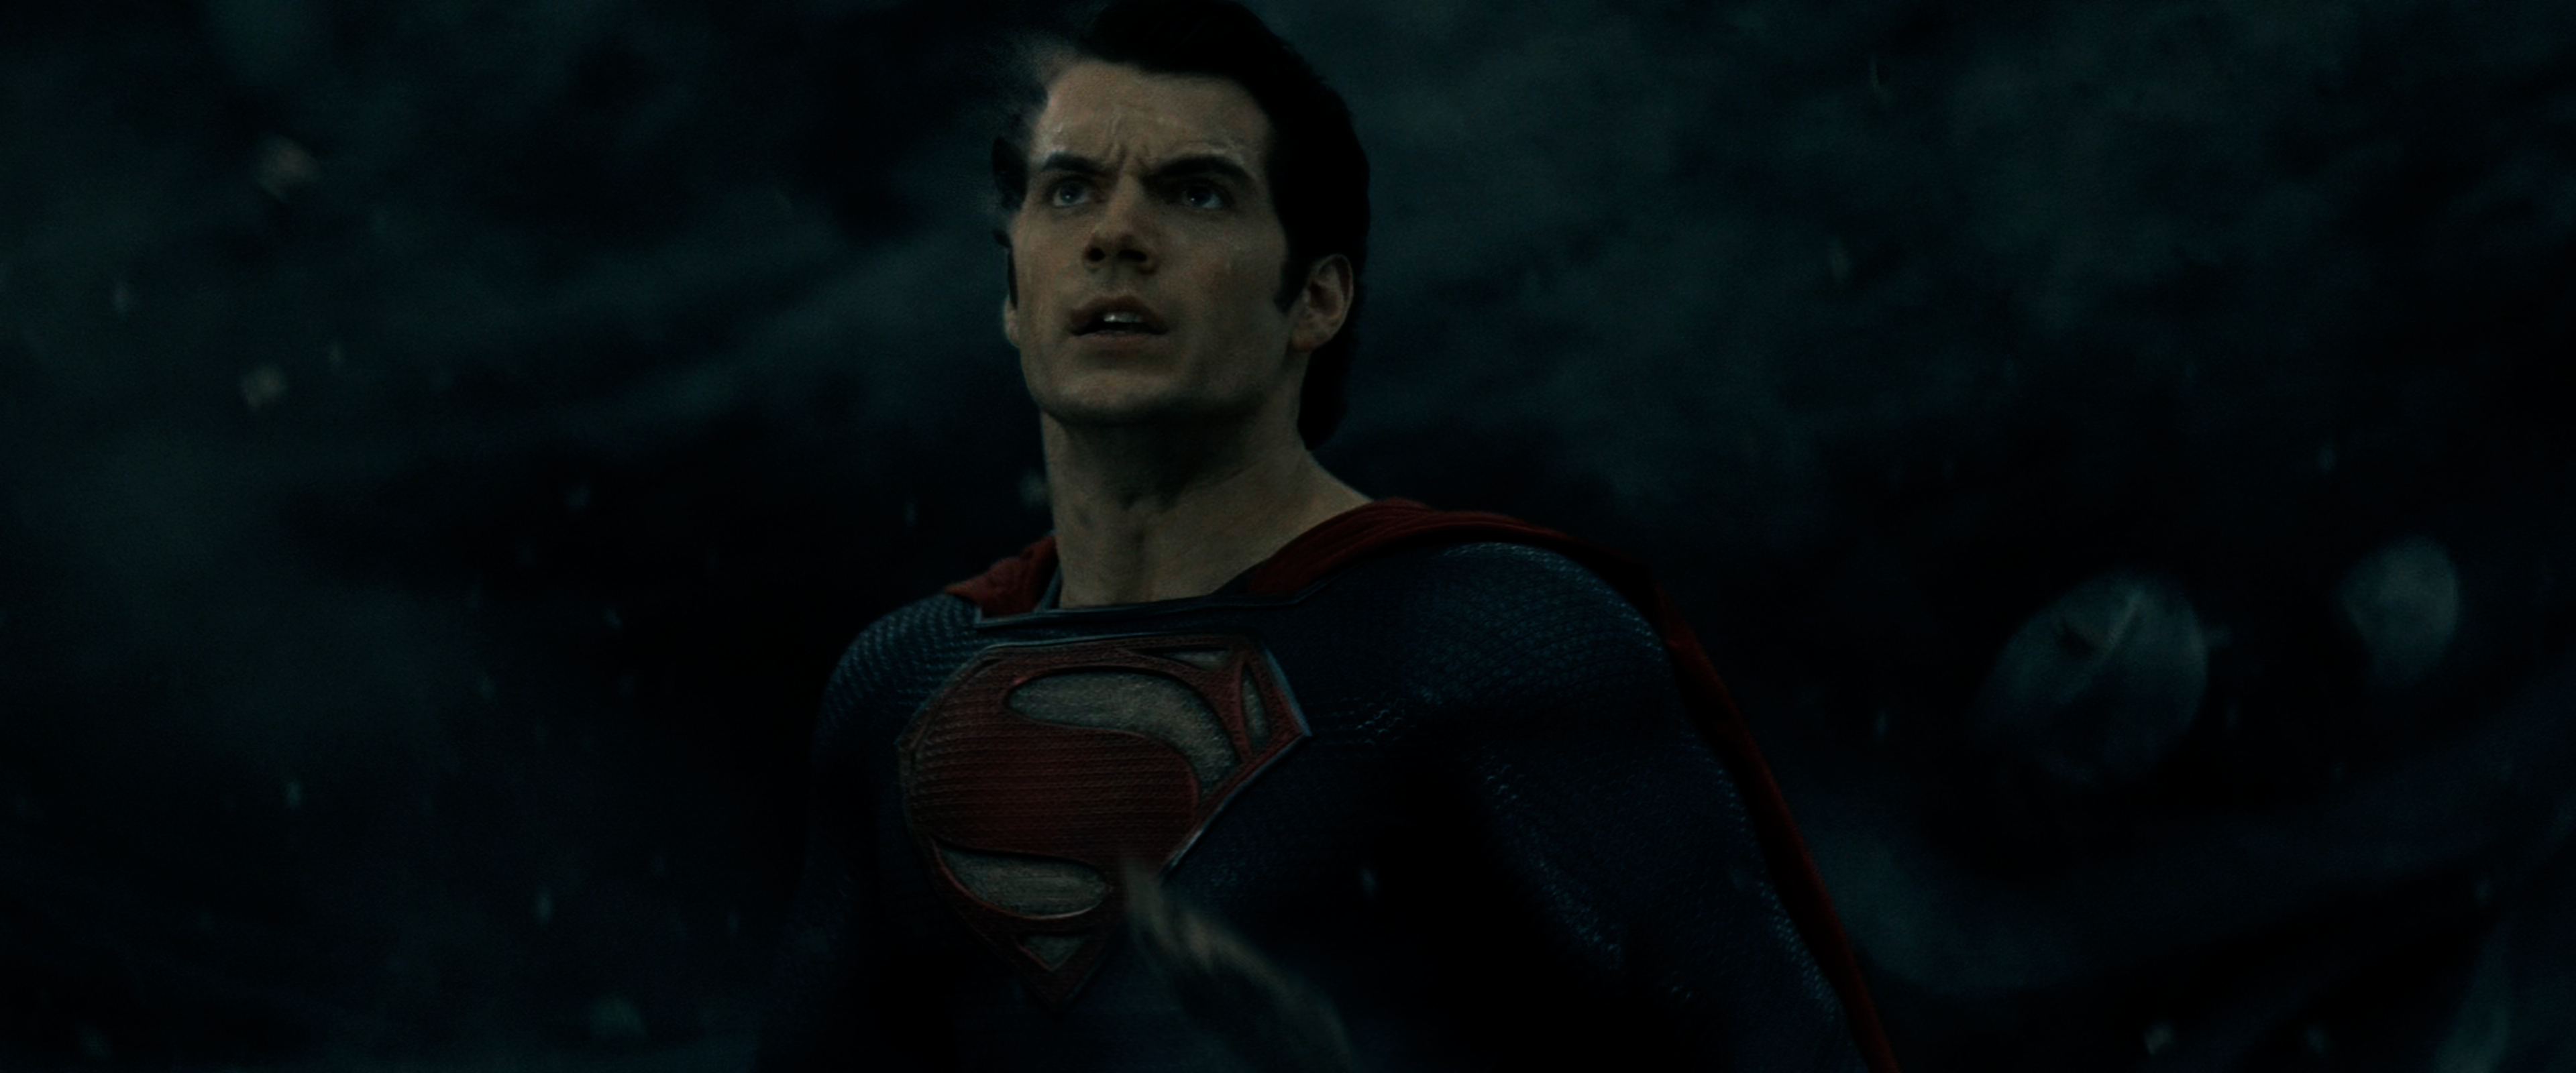 Супермен стал человеком. Man of Steel 2013.